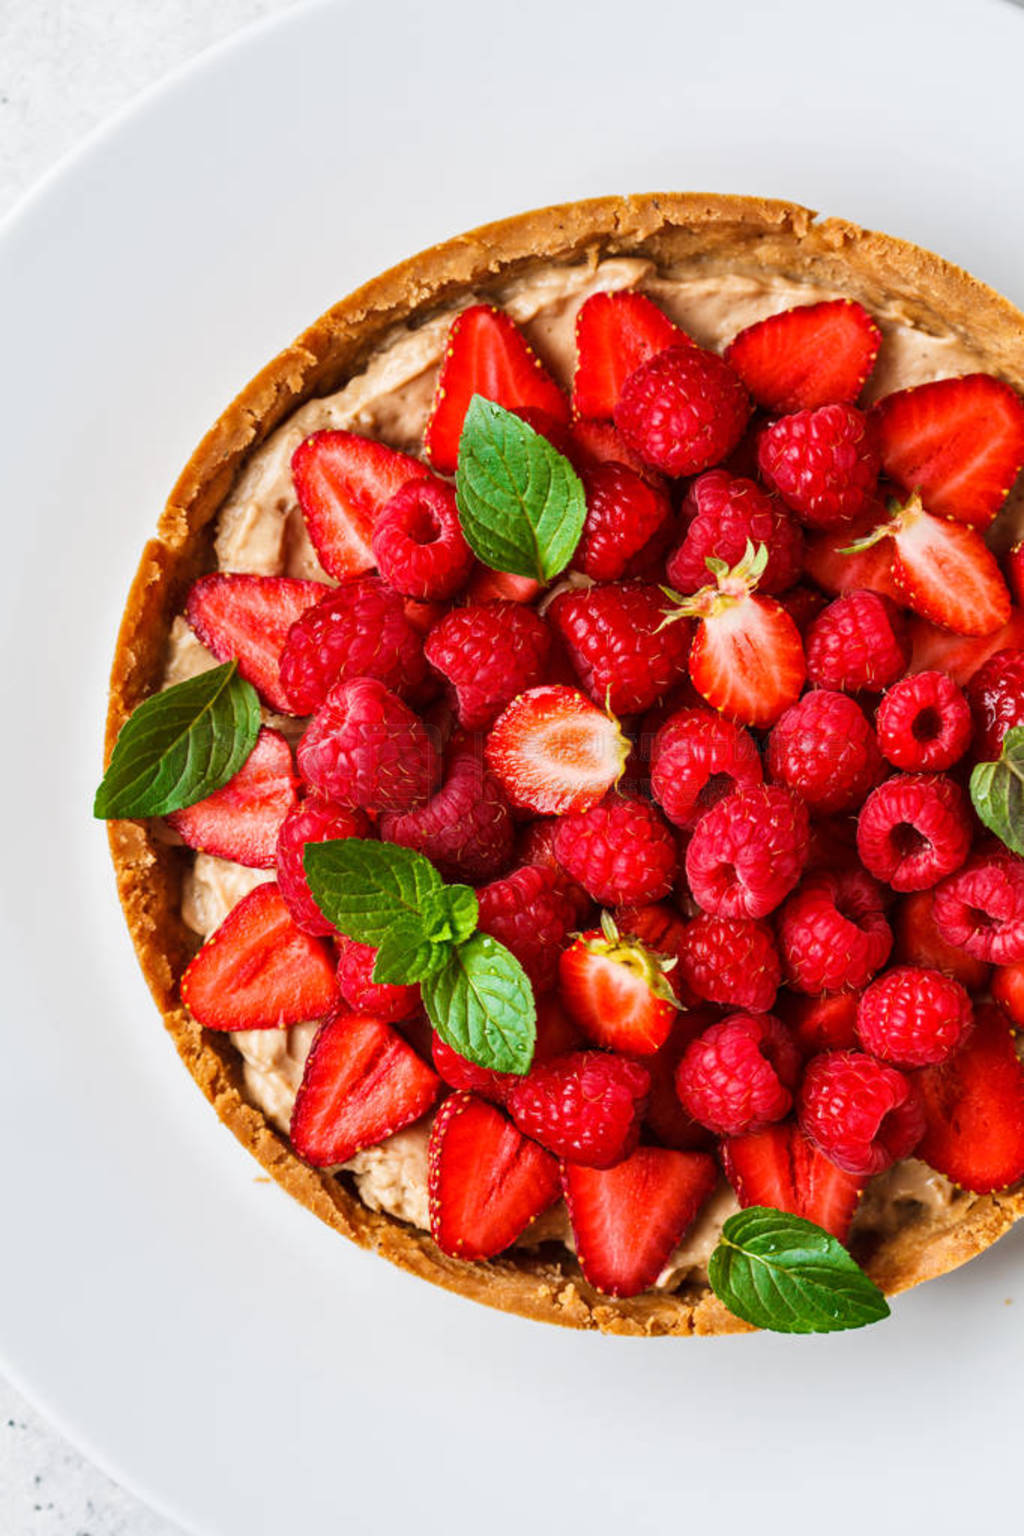 Whole berry tart with raspberries, strawberries and cream